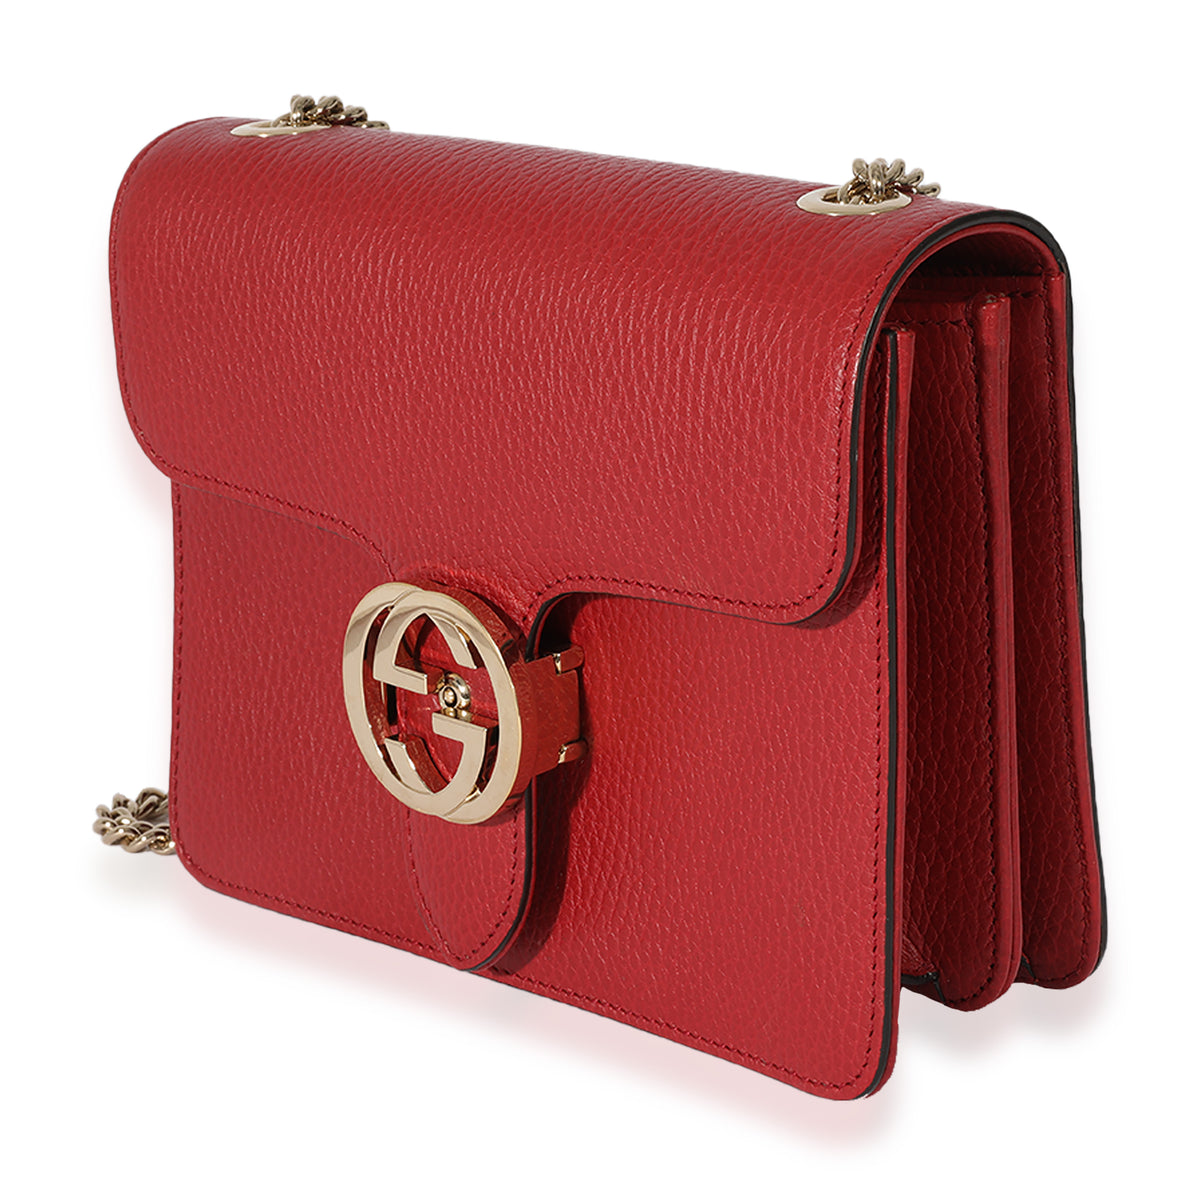 Gucci Red Leather Small Dollar Interlocking Chain Bag